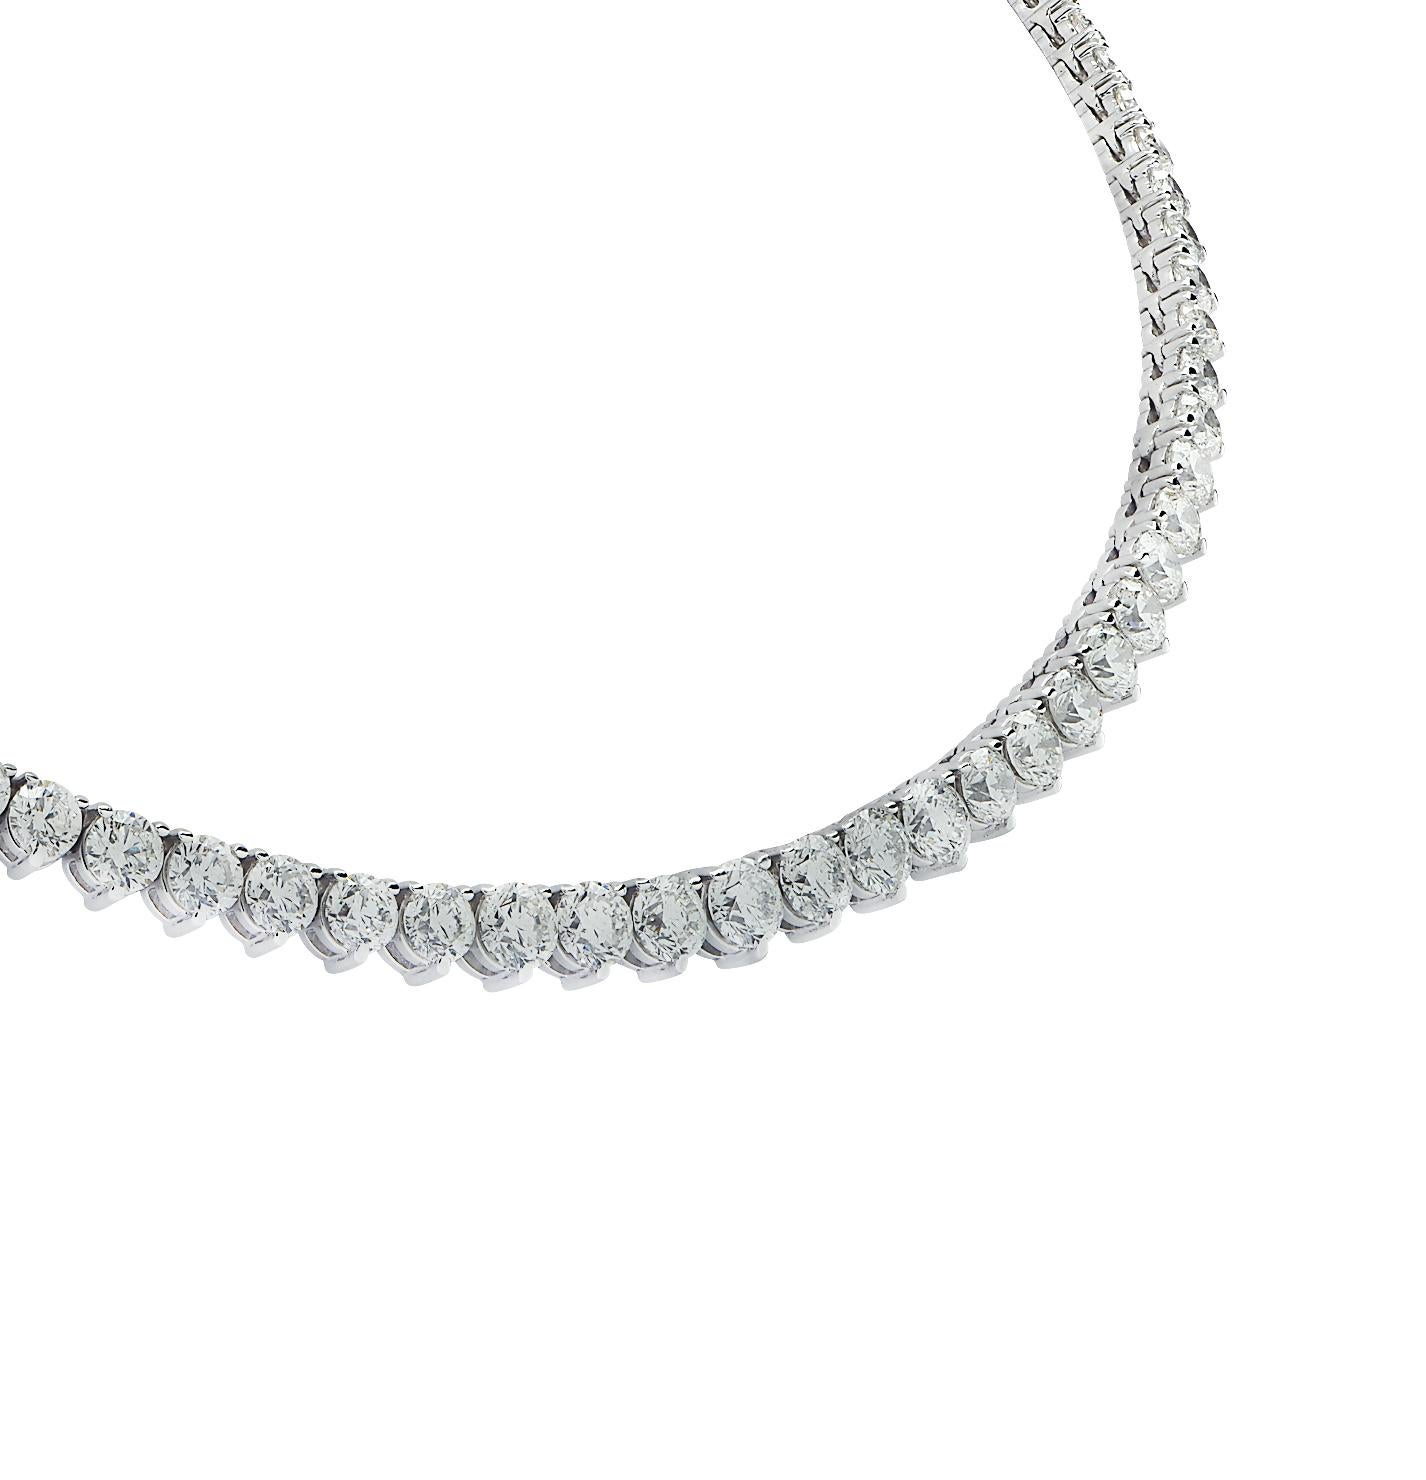 Round Cut Vivid Diamonds 19.24 Carat Diamond Riviera Necklace For Sale